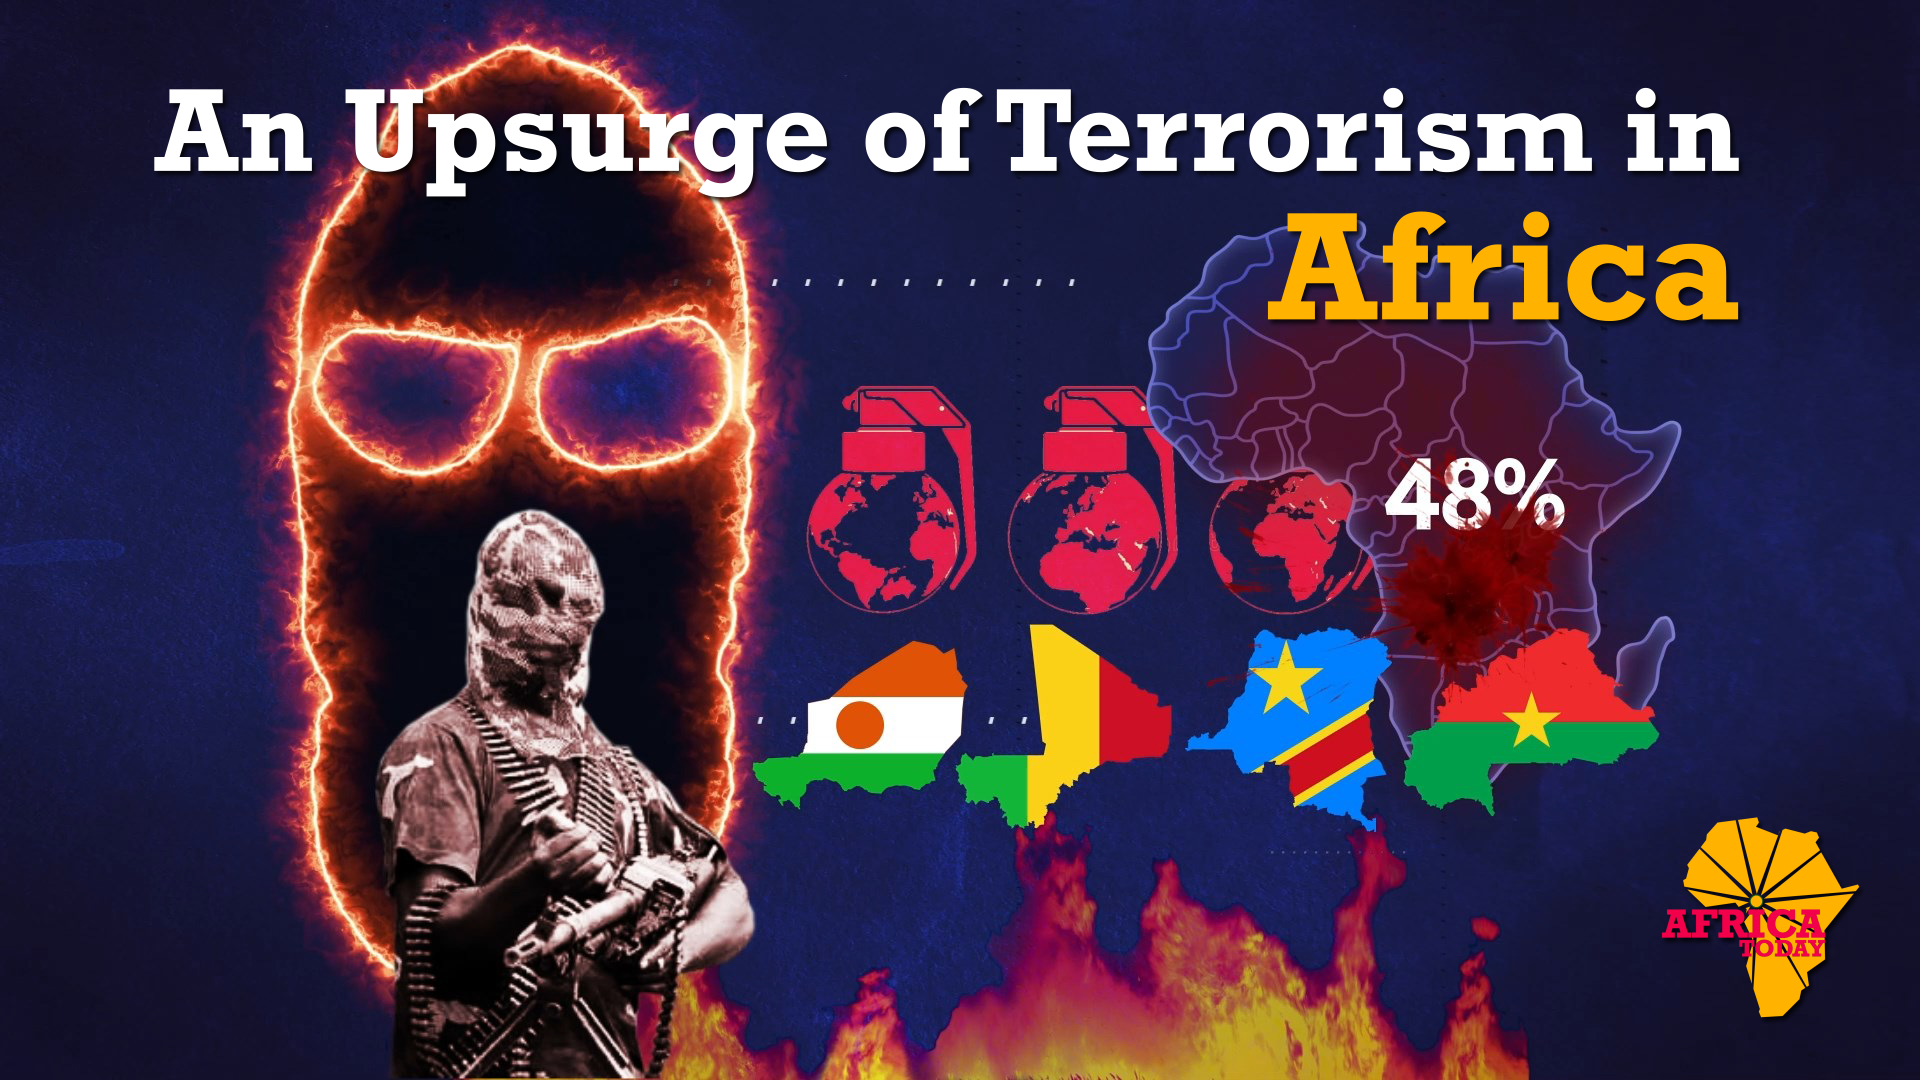 An upsurge of Terrorism in Africa